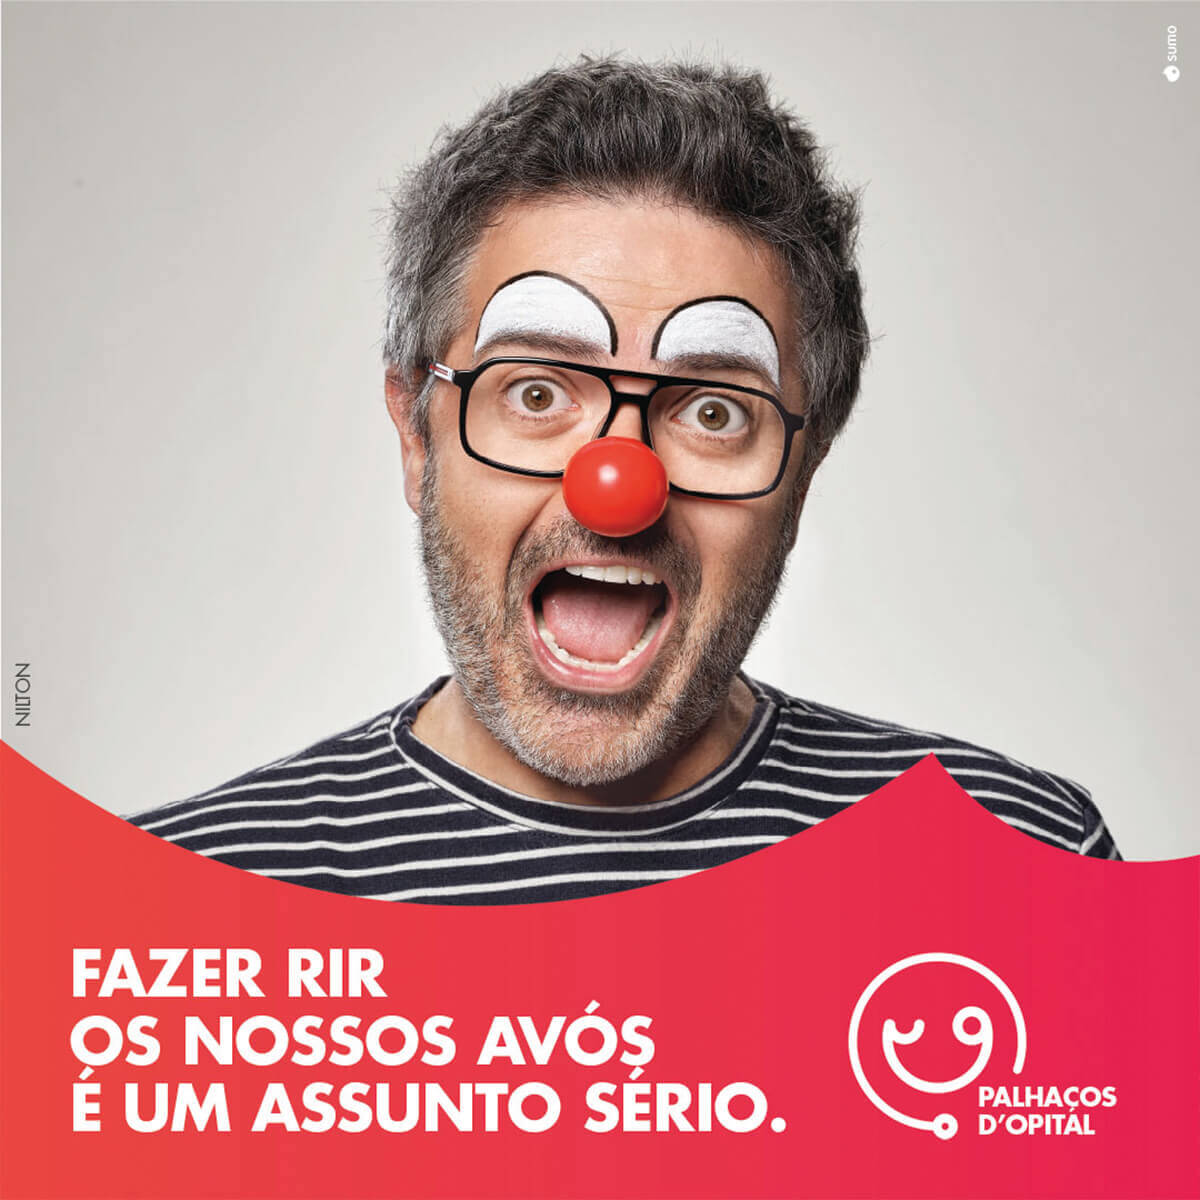 revista amar - portugal - palhaços d'opital - nilton